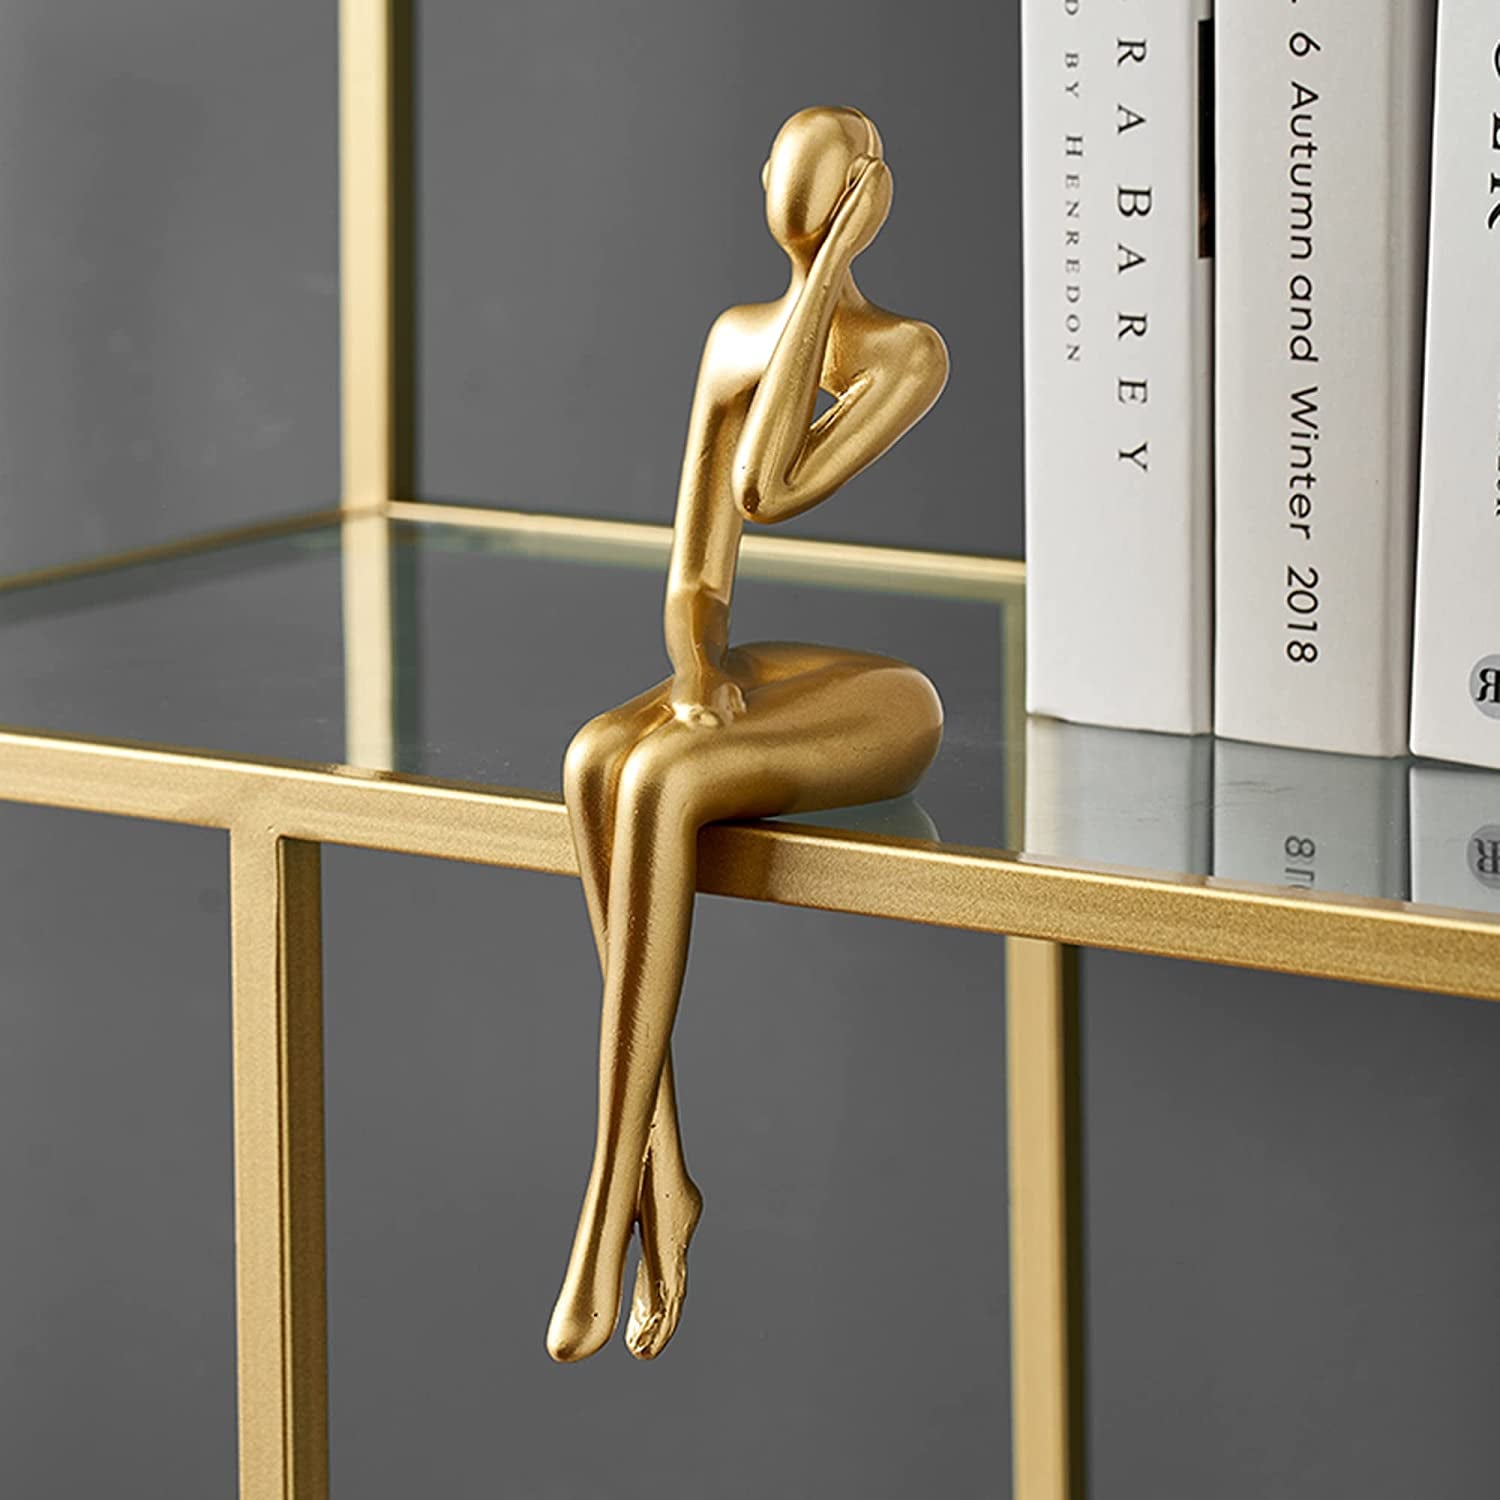 Gold Statue Home Decorations for Living Room,Shelf Decor Modern Bookshelf Decor Figurines Desk Sculpture Table Decor 3 Piece